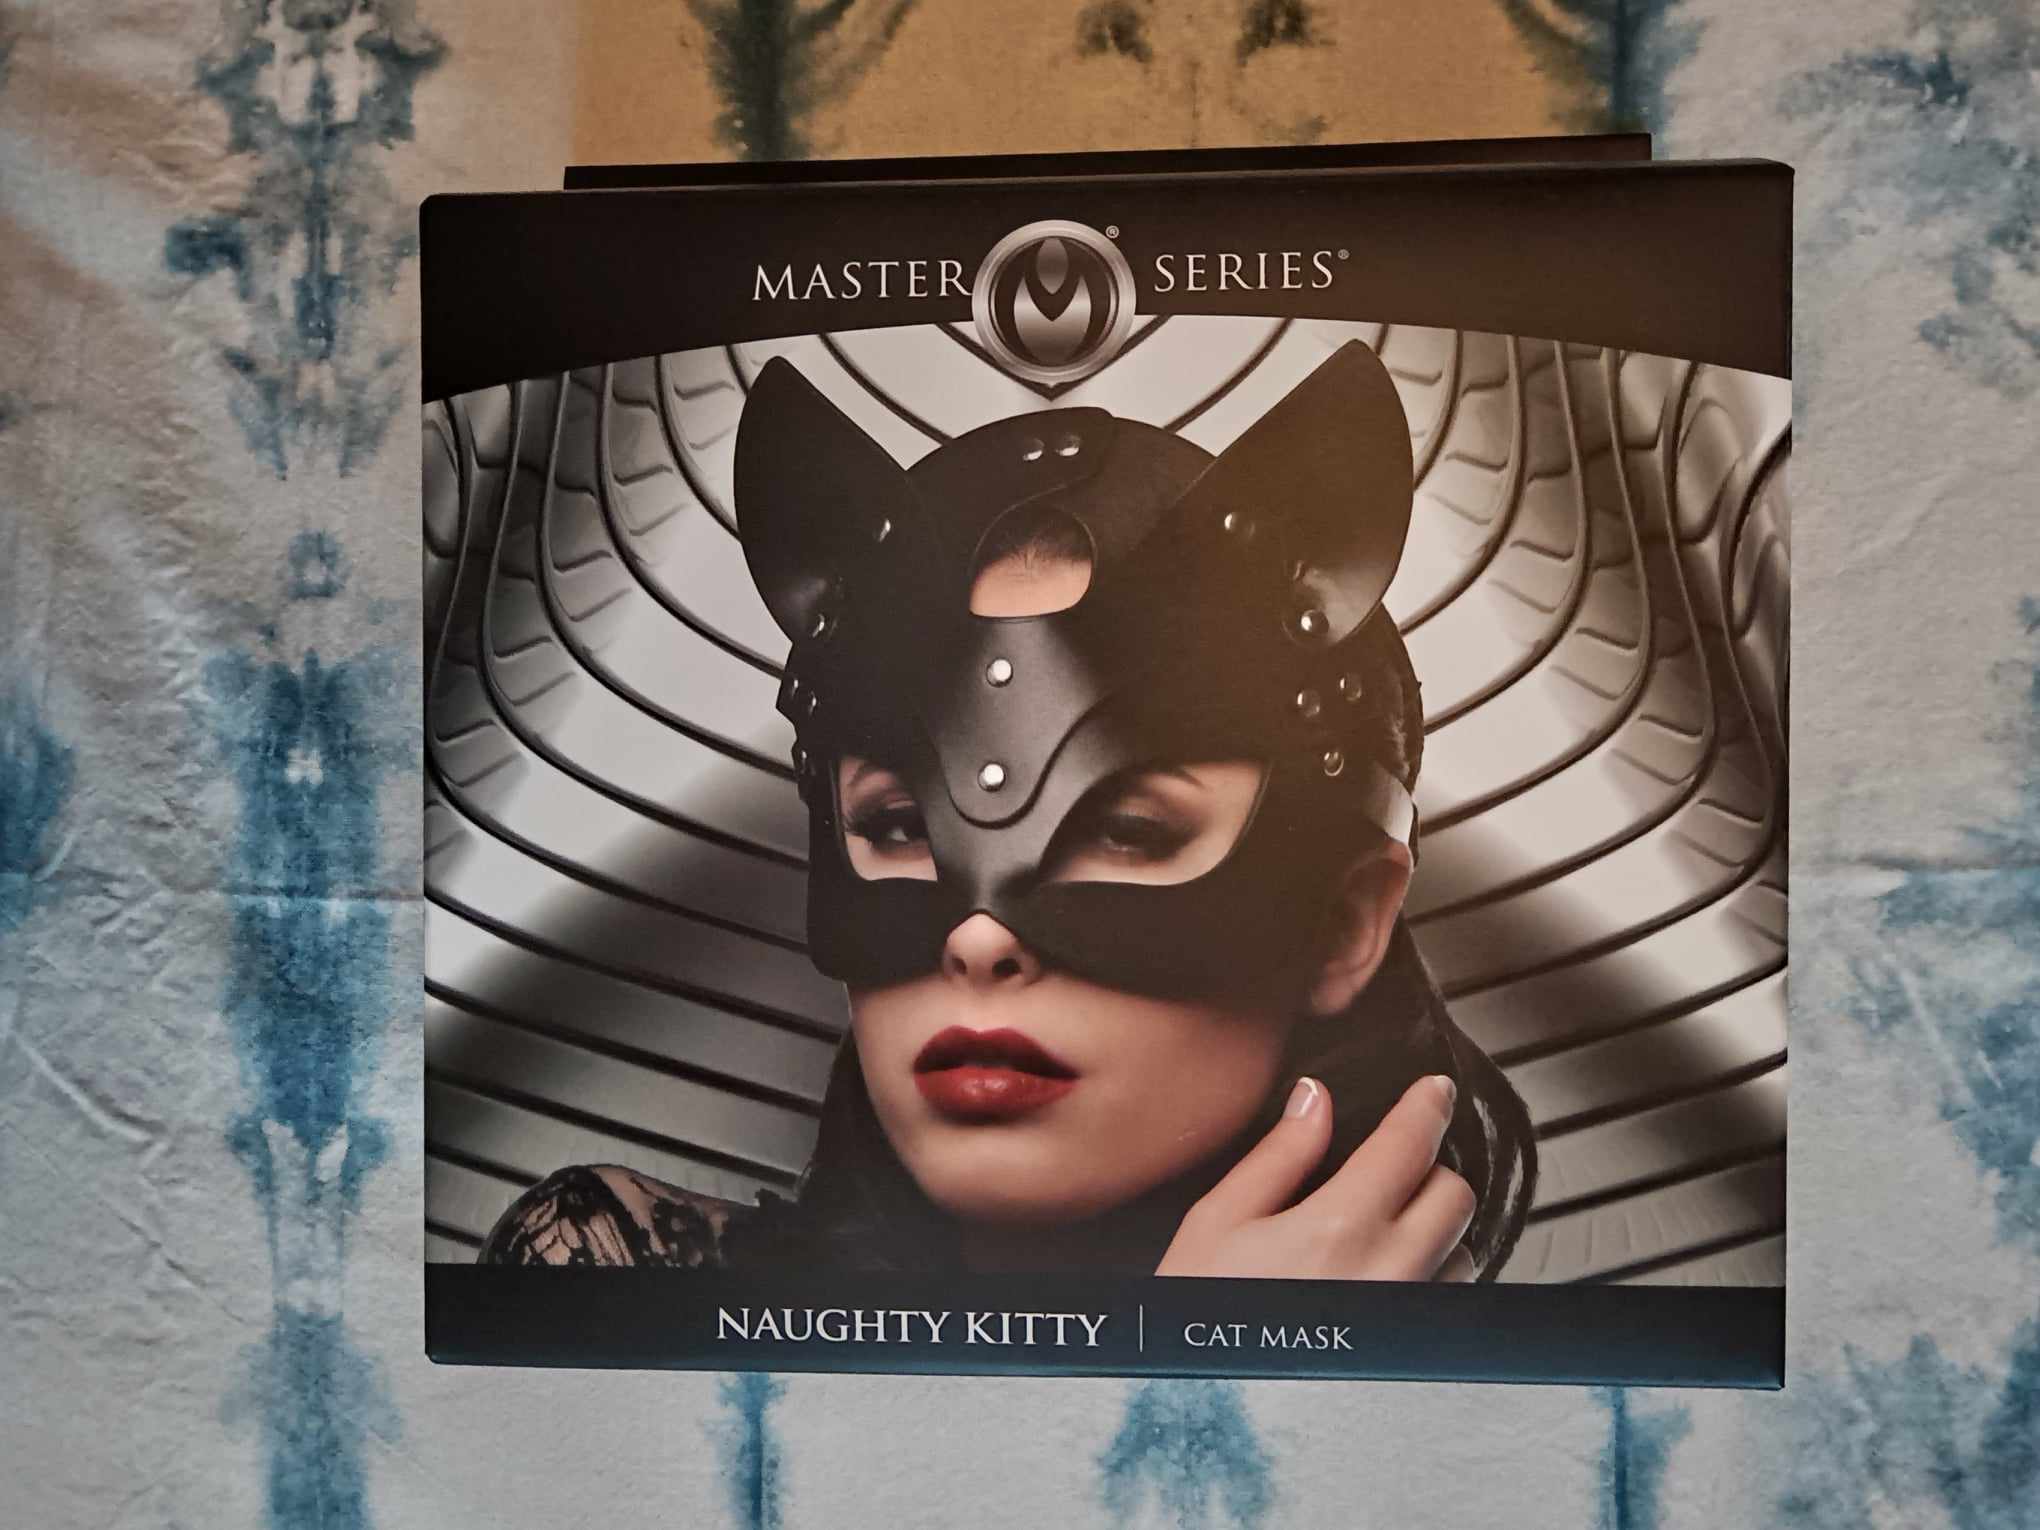 Master Series Naughty Kitty Cat Mask. Slide 9